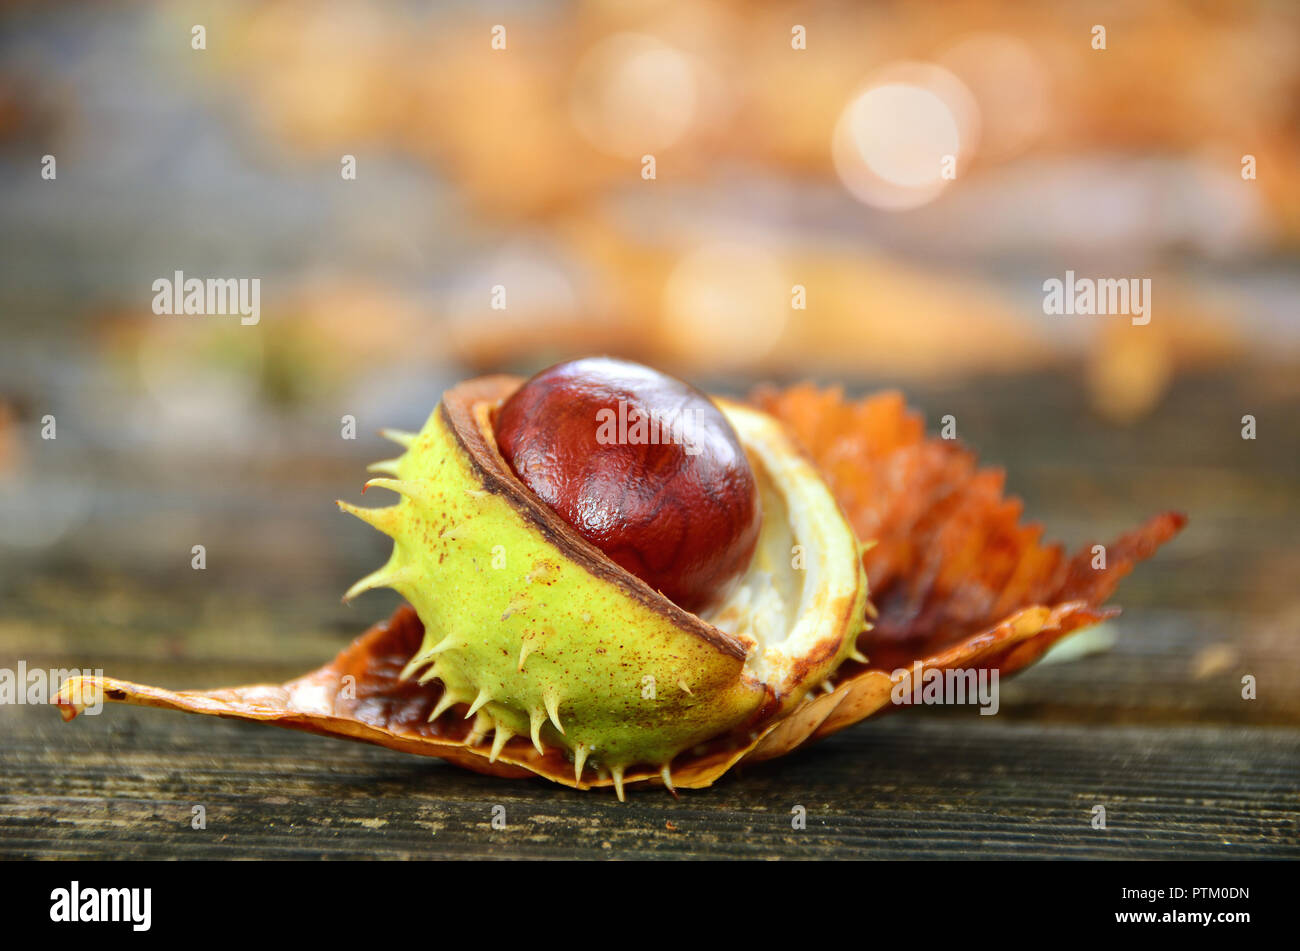 Burst castaño (Castanea) con shell, imagen simbólica de otoño, Alemania Foto de stock